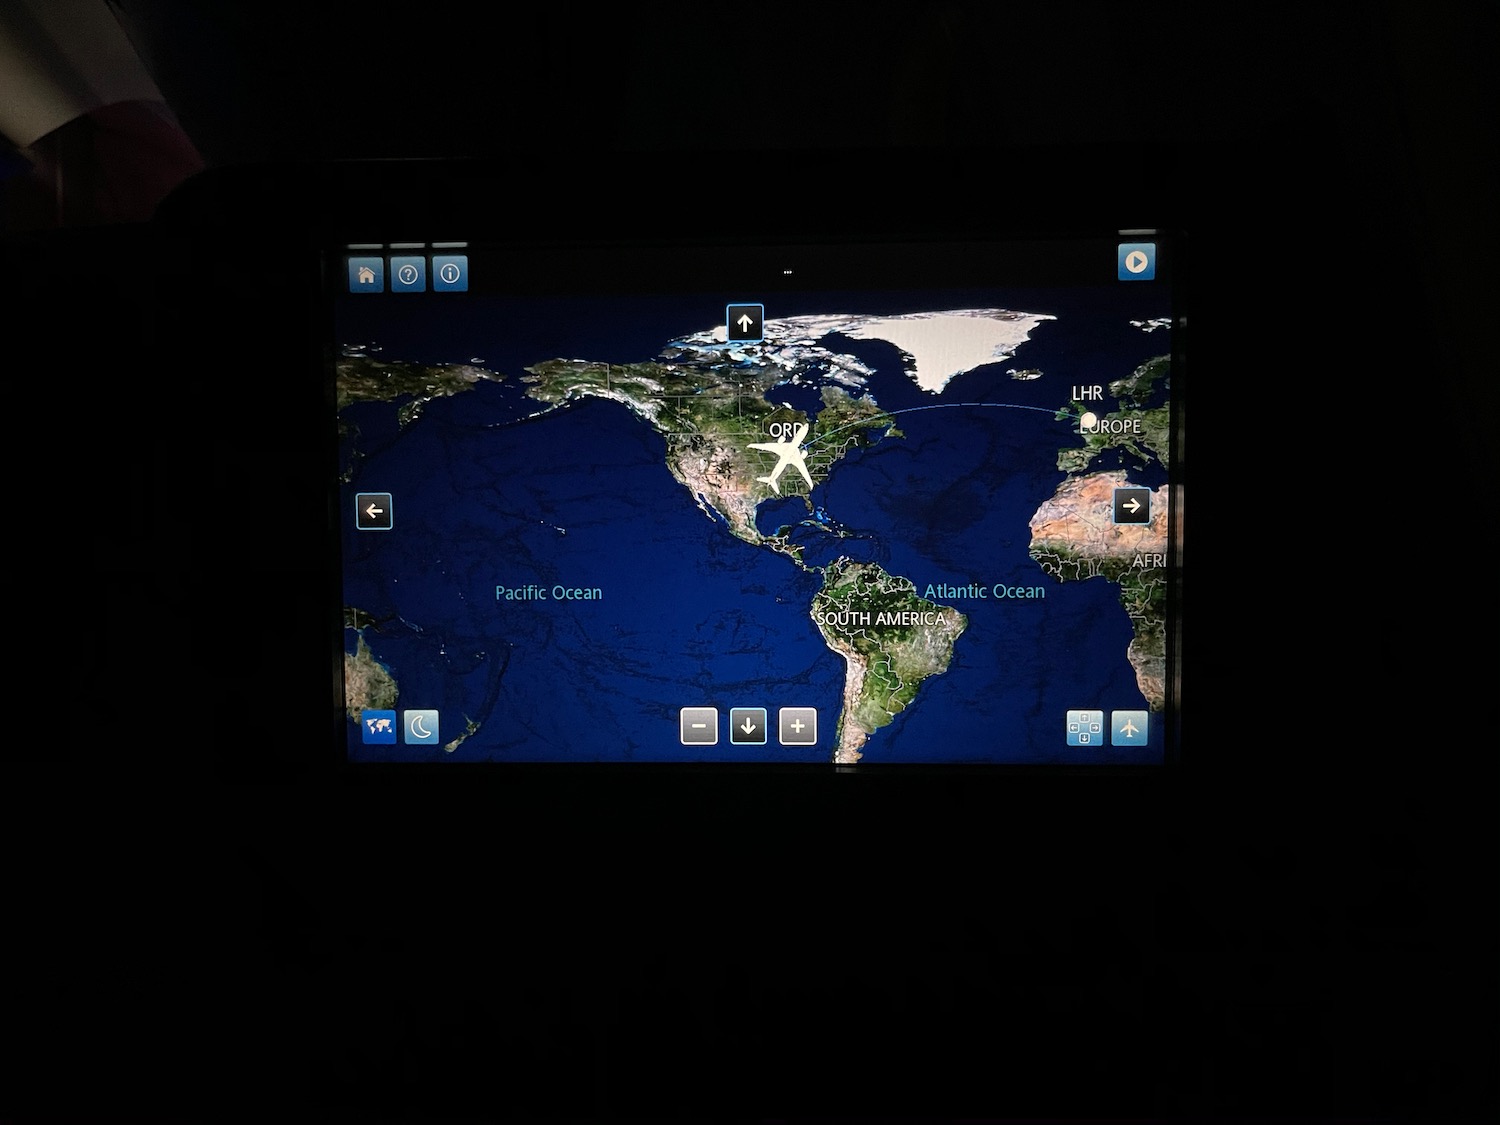 a screen shot of a computer